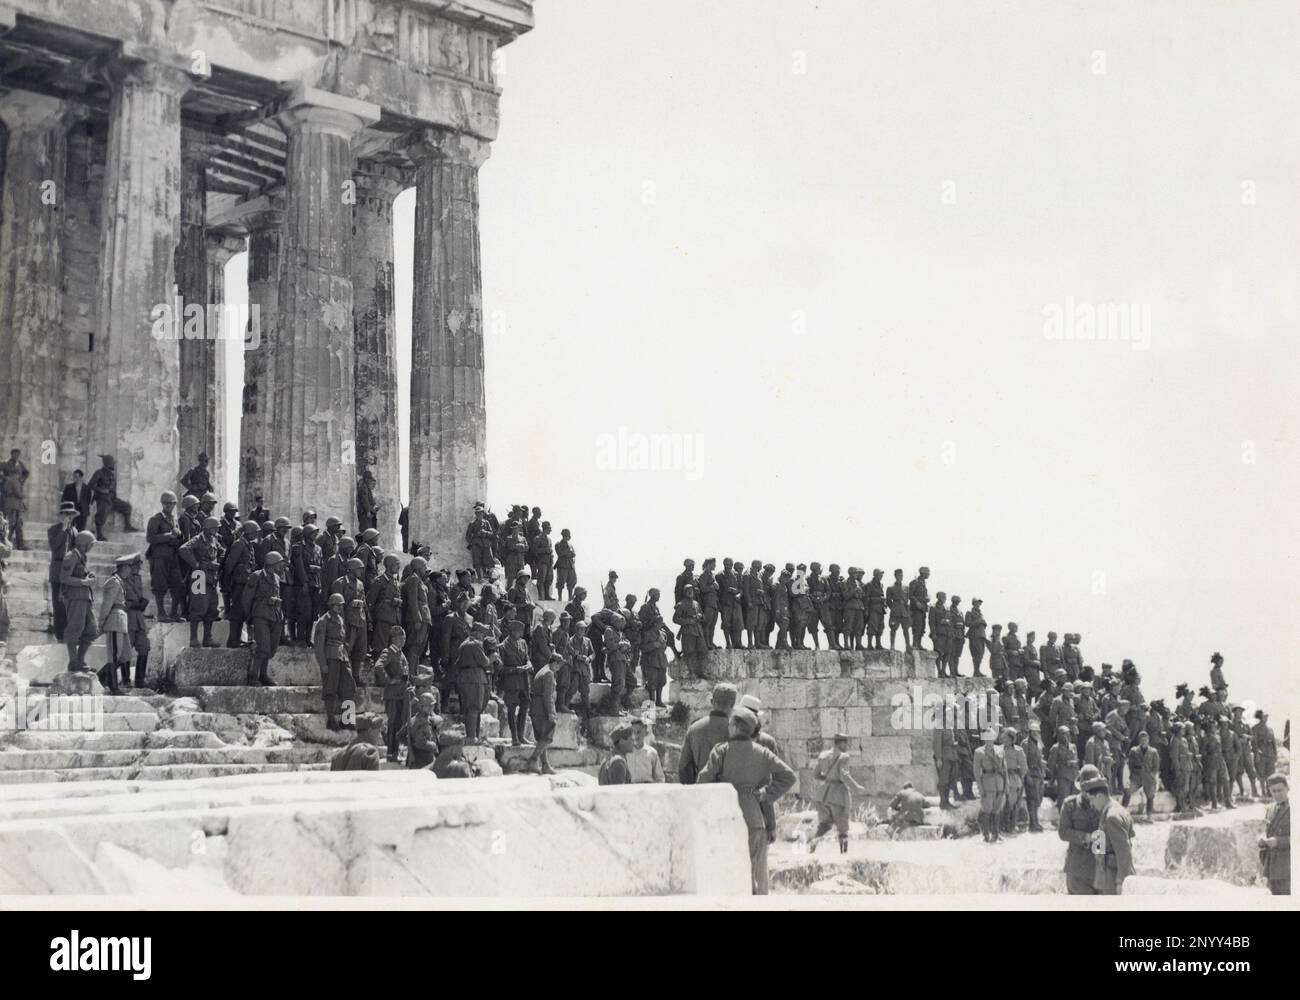 1942 ca. Athens , Greece : The italian military fascist troups invade the Greece. In this photo some of italian platoons ( Alpini and Bersaglieri ) visiting the Acropolis celebrated monuments - SECONDA GUERRA MONDIALE - World War 2nd - WWII - FRONTE GRECO - ATENE - GRECIA - ACROPOLI - miliari soldati italiani - COLONIALISMO - COLONIALISM - FASCIST - FASCISTA - FASCISMO - FASCISM - TURISMO - tourism - archeology - archeologia - tempio - temple - templio  - FRONTE GRECO - BERSAGLIERE - ALPINO ----  Archivio GBB Stock Photo